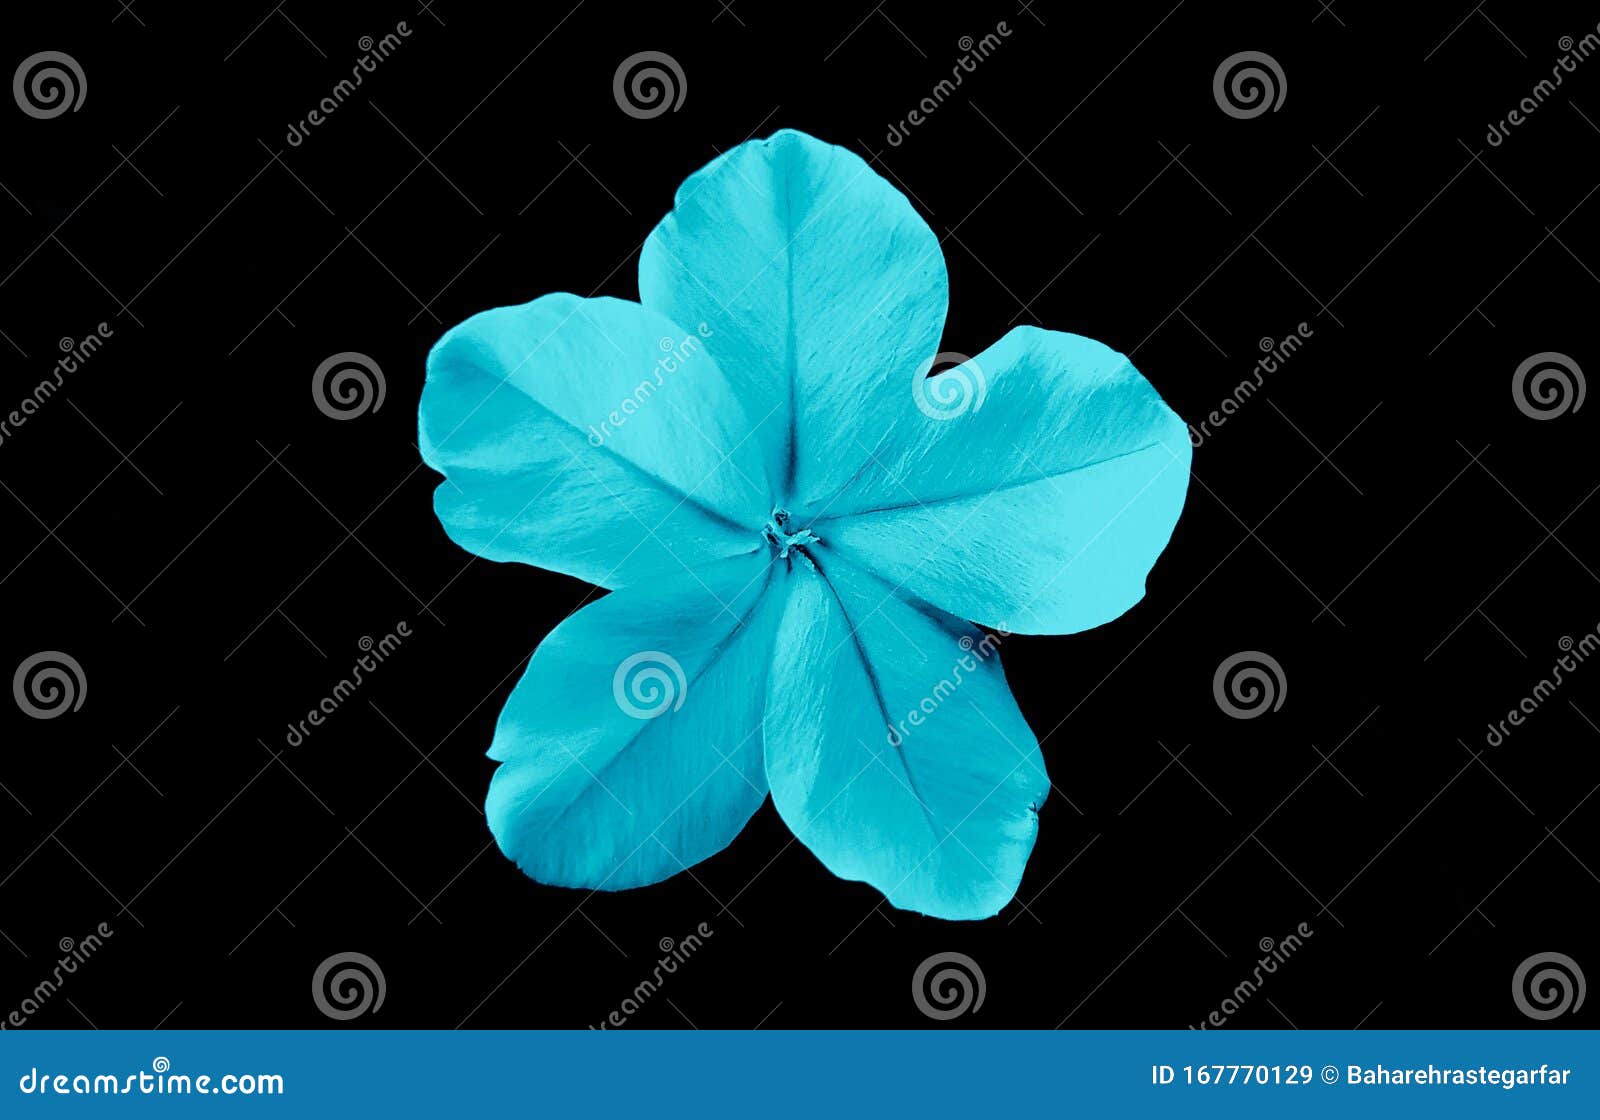 Blue Flower Isolated on Black Background Stock Image - Image of blue,  flowers: 167770129